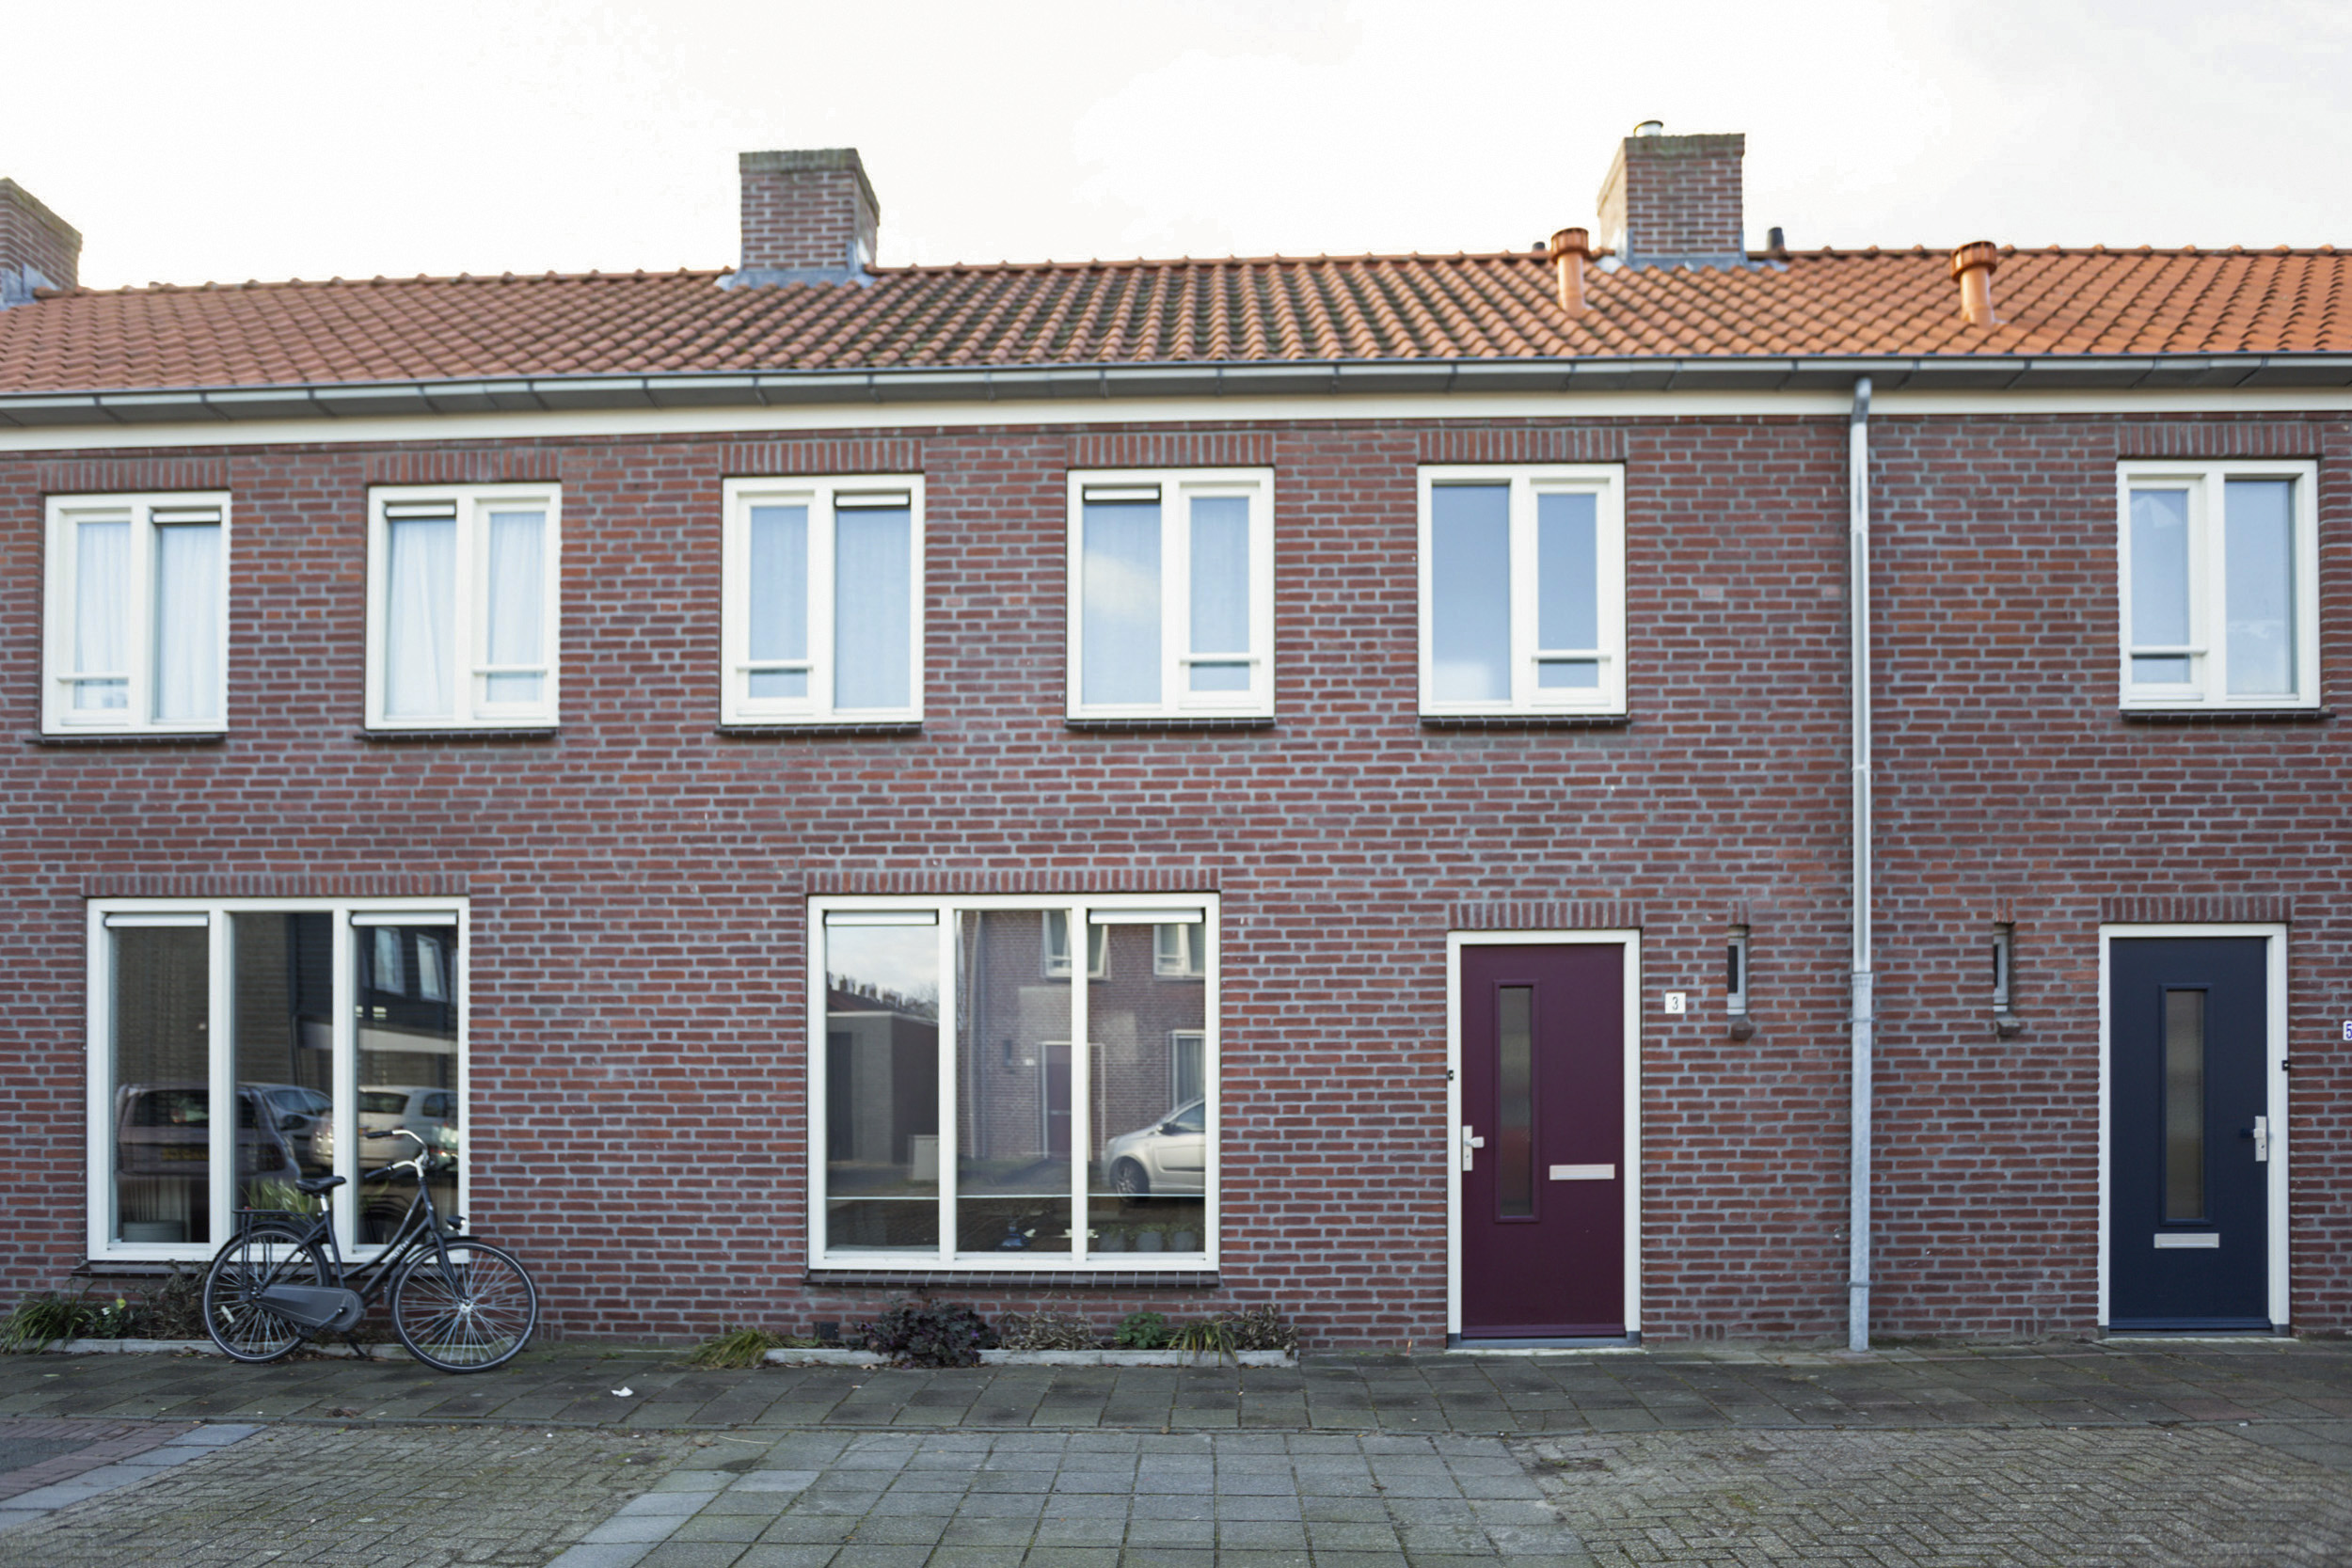 Slotbossestraat 3, 4901 VD Oosterhout, Nederland